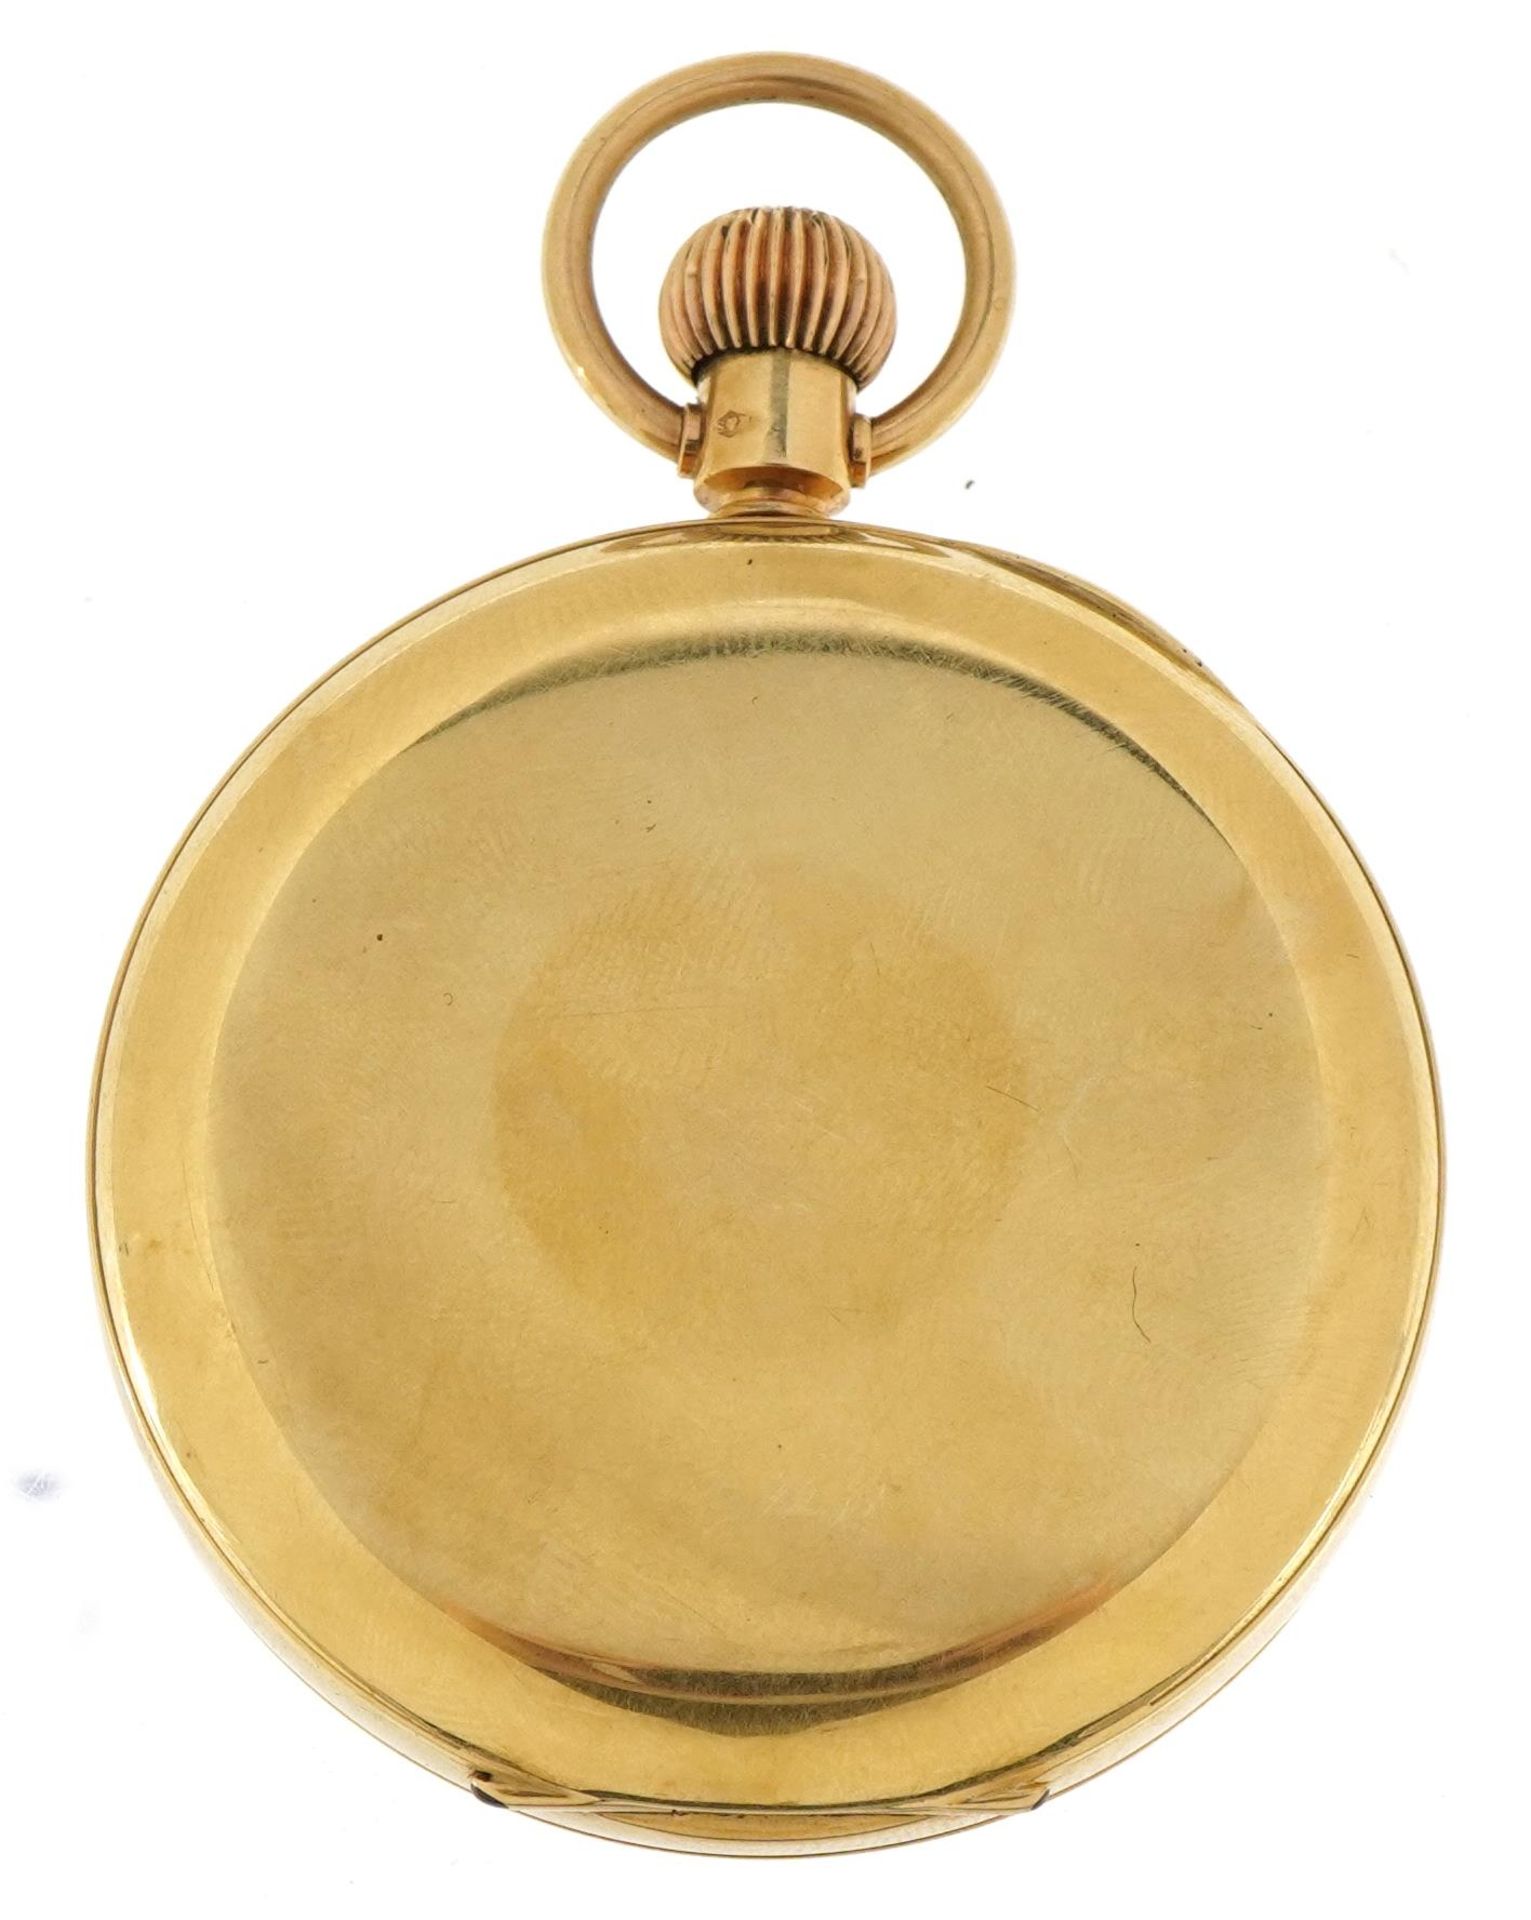 Buren, gentlemen's Buren 9ct gold open face pocket watch with subsidiary dial, the case numbered - Image 2 of 4